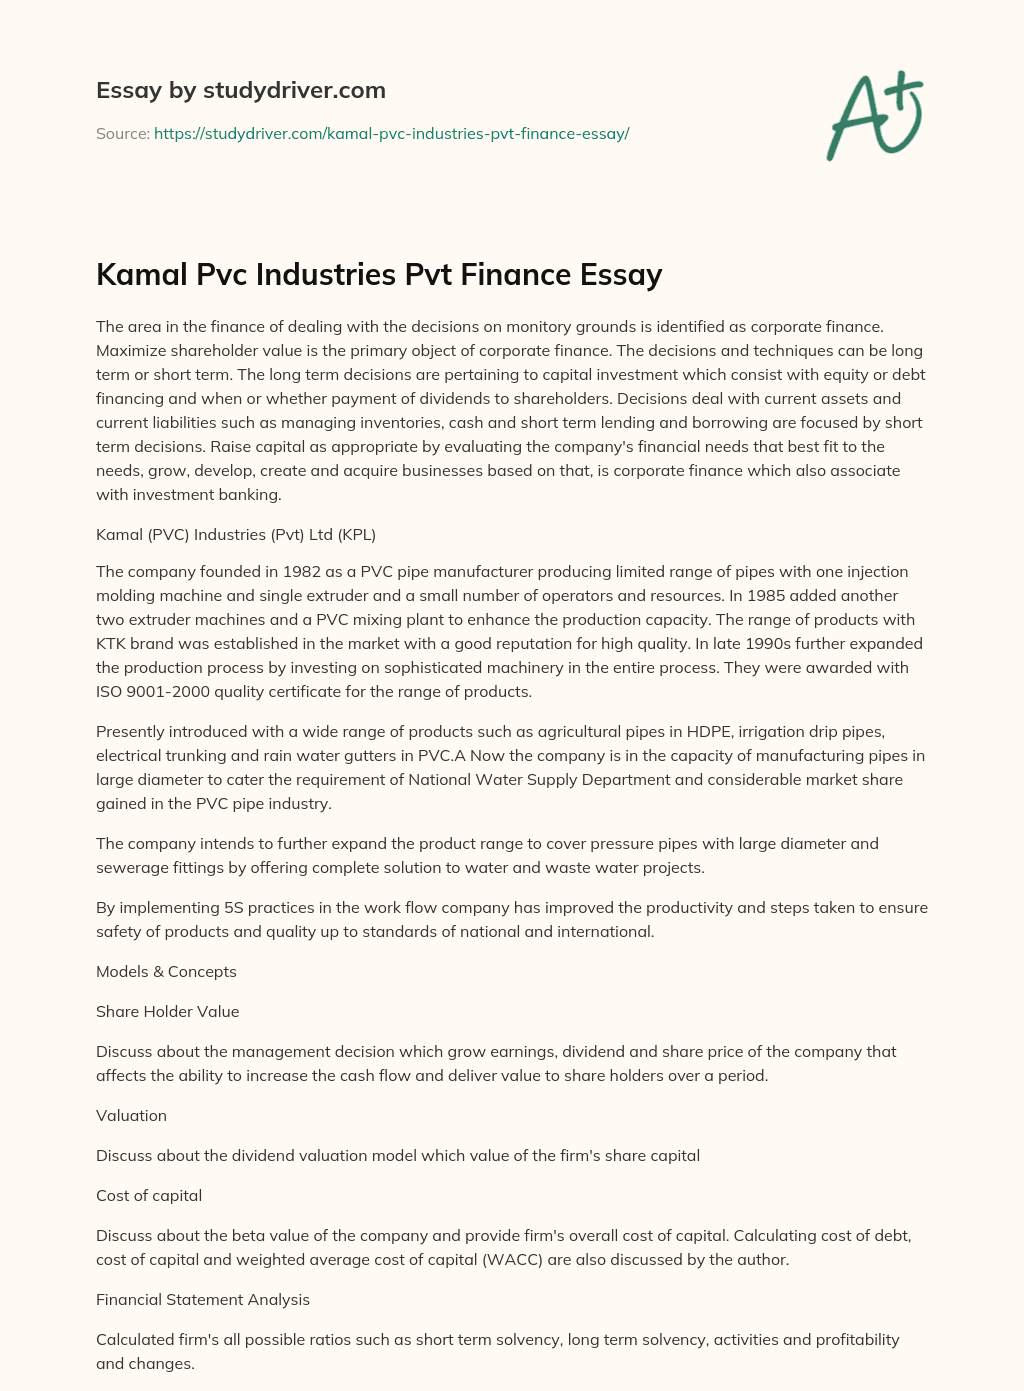 Kamal Pvc Industries Pvt Finance Essay essay